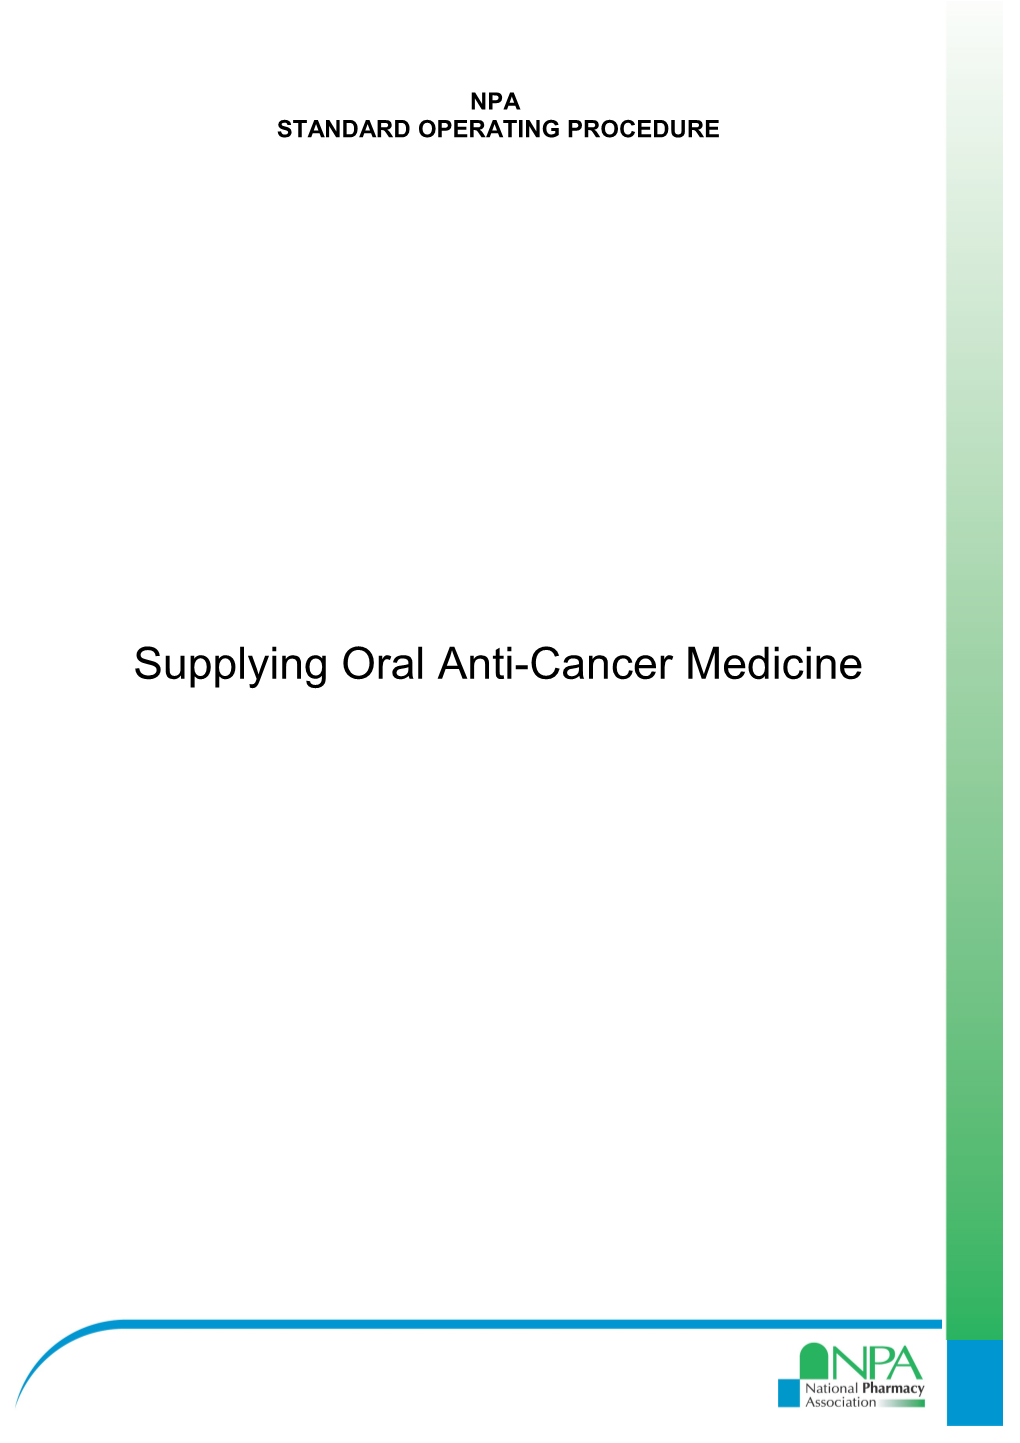 Supplying Oral Anti-Cancer Medicines